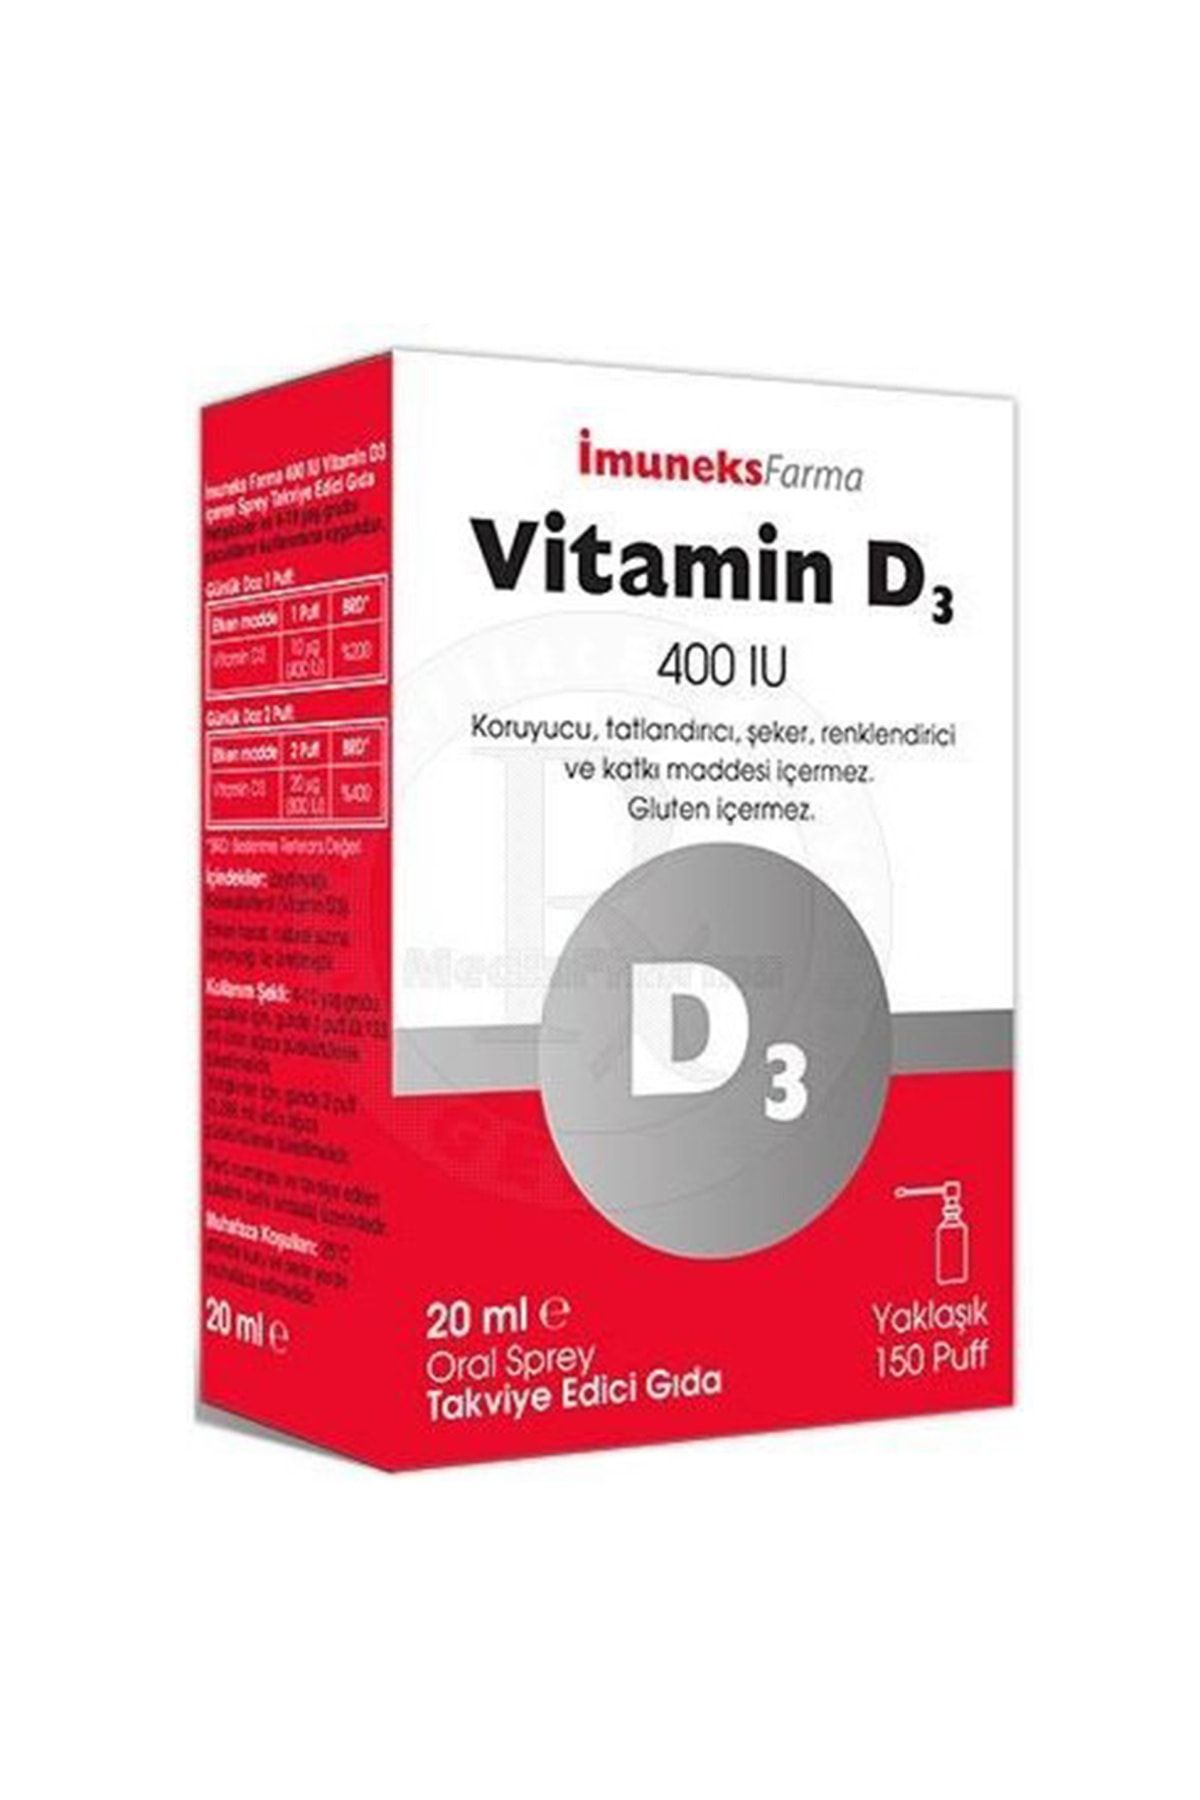 Imuneks Farma Vitamin D3 400 Iu